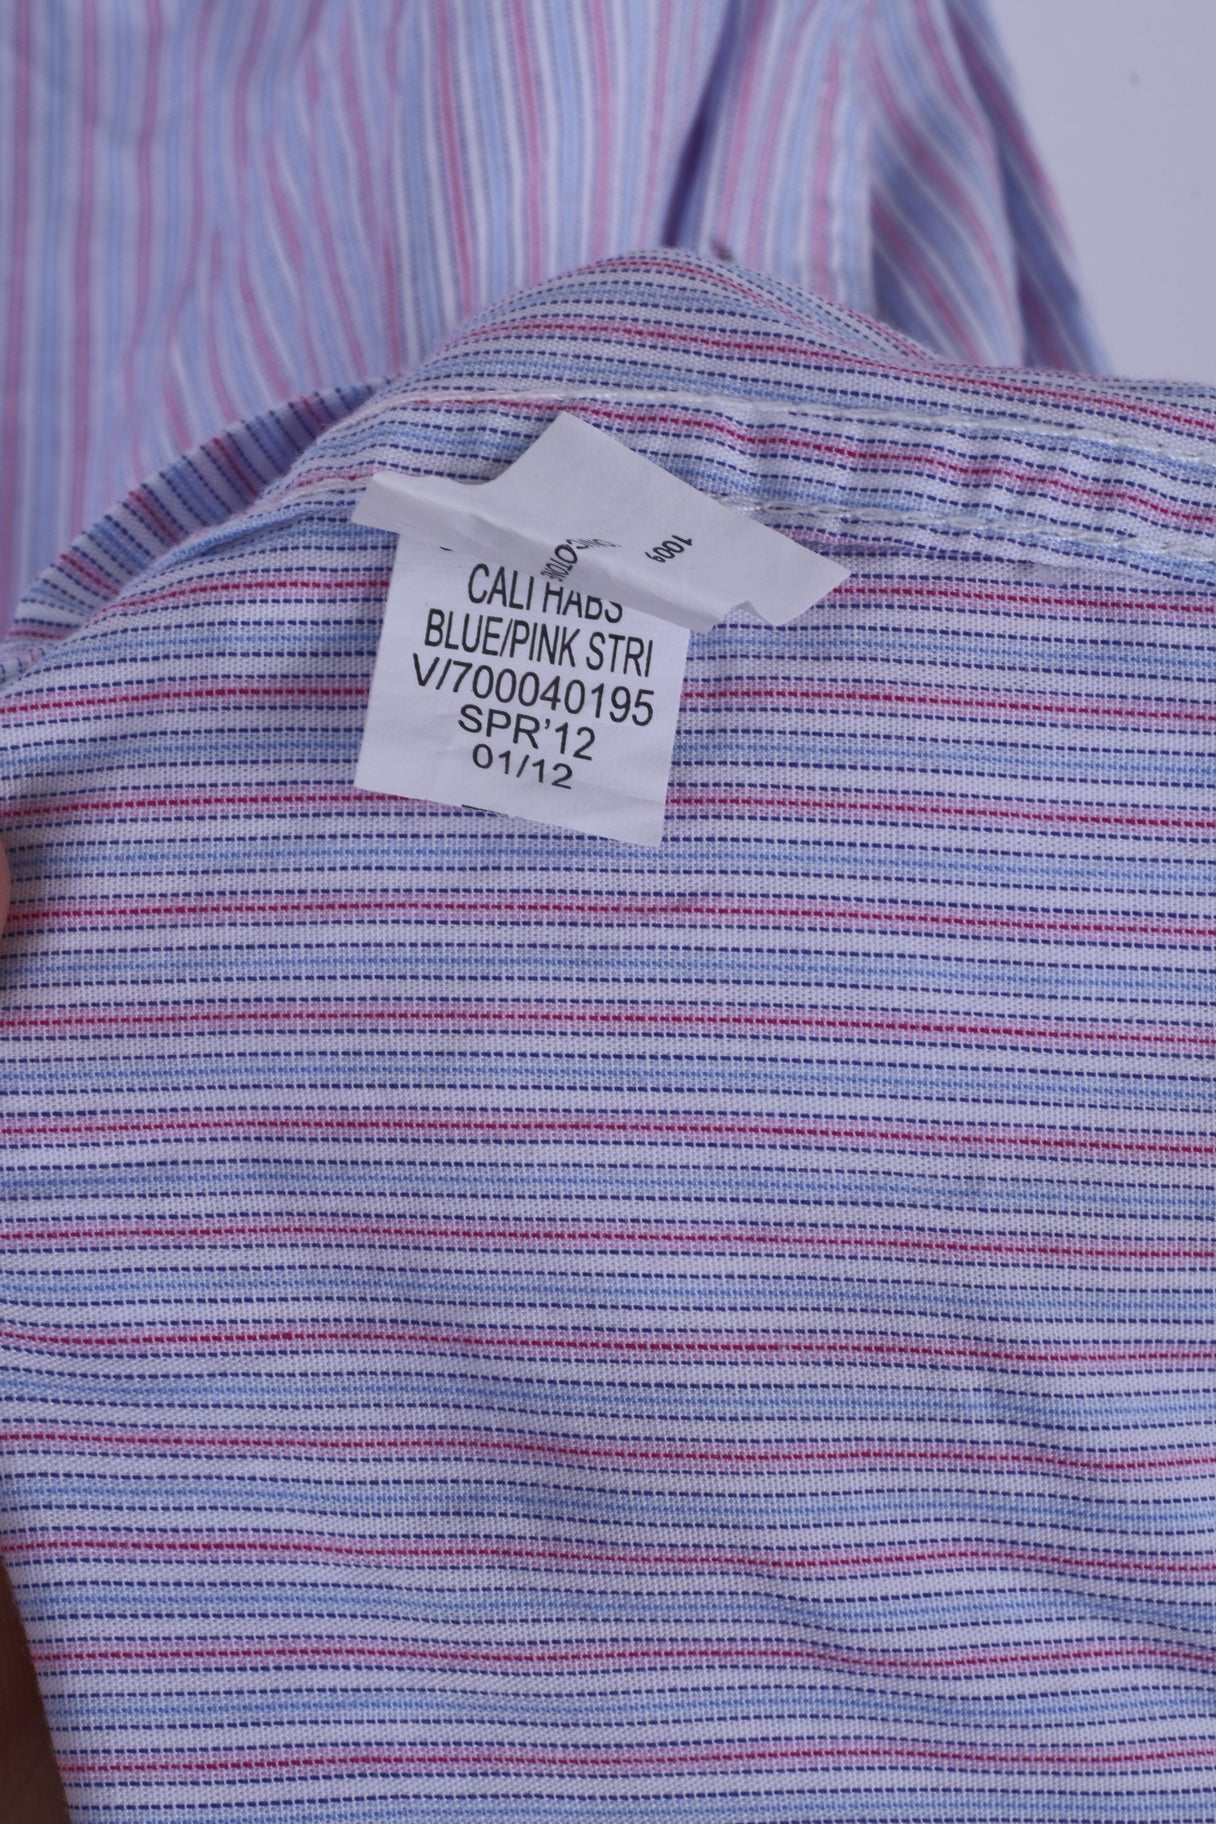 Gap Mens L Casual Shirt Blue Striped Cotton Classic Fit Long Sleeve